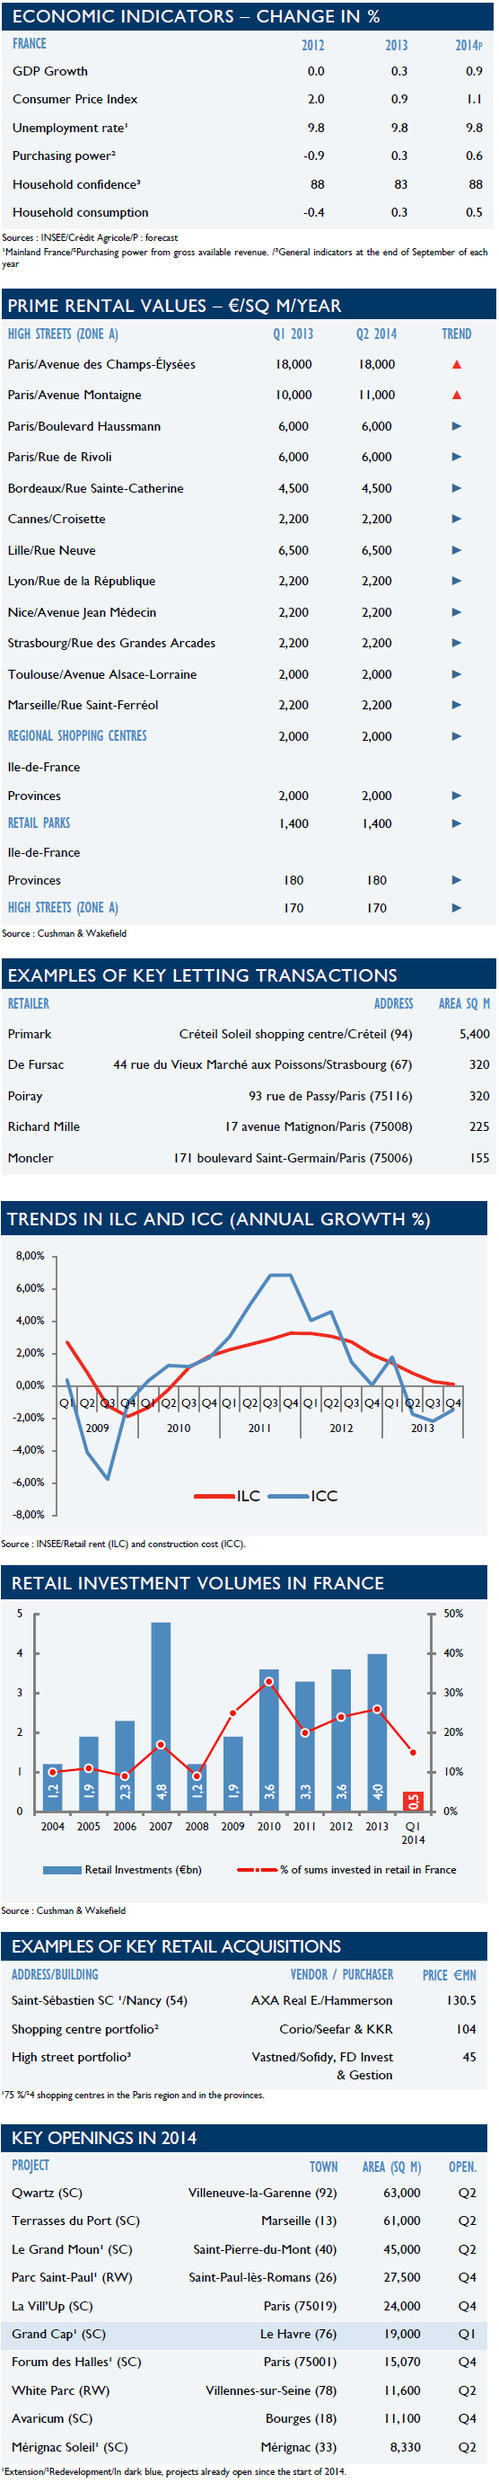 WPC News | France Economic Indicators 2014